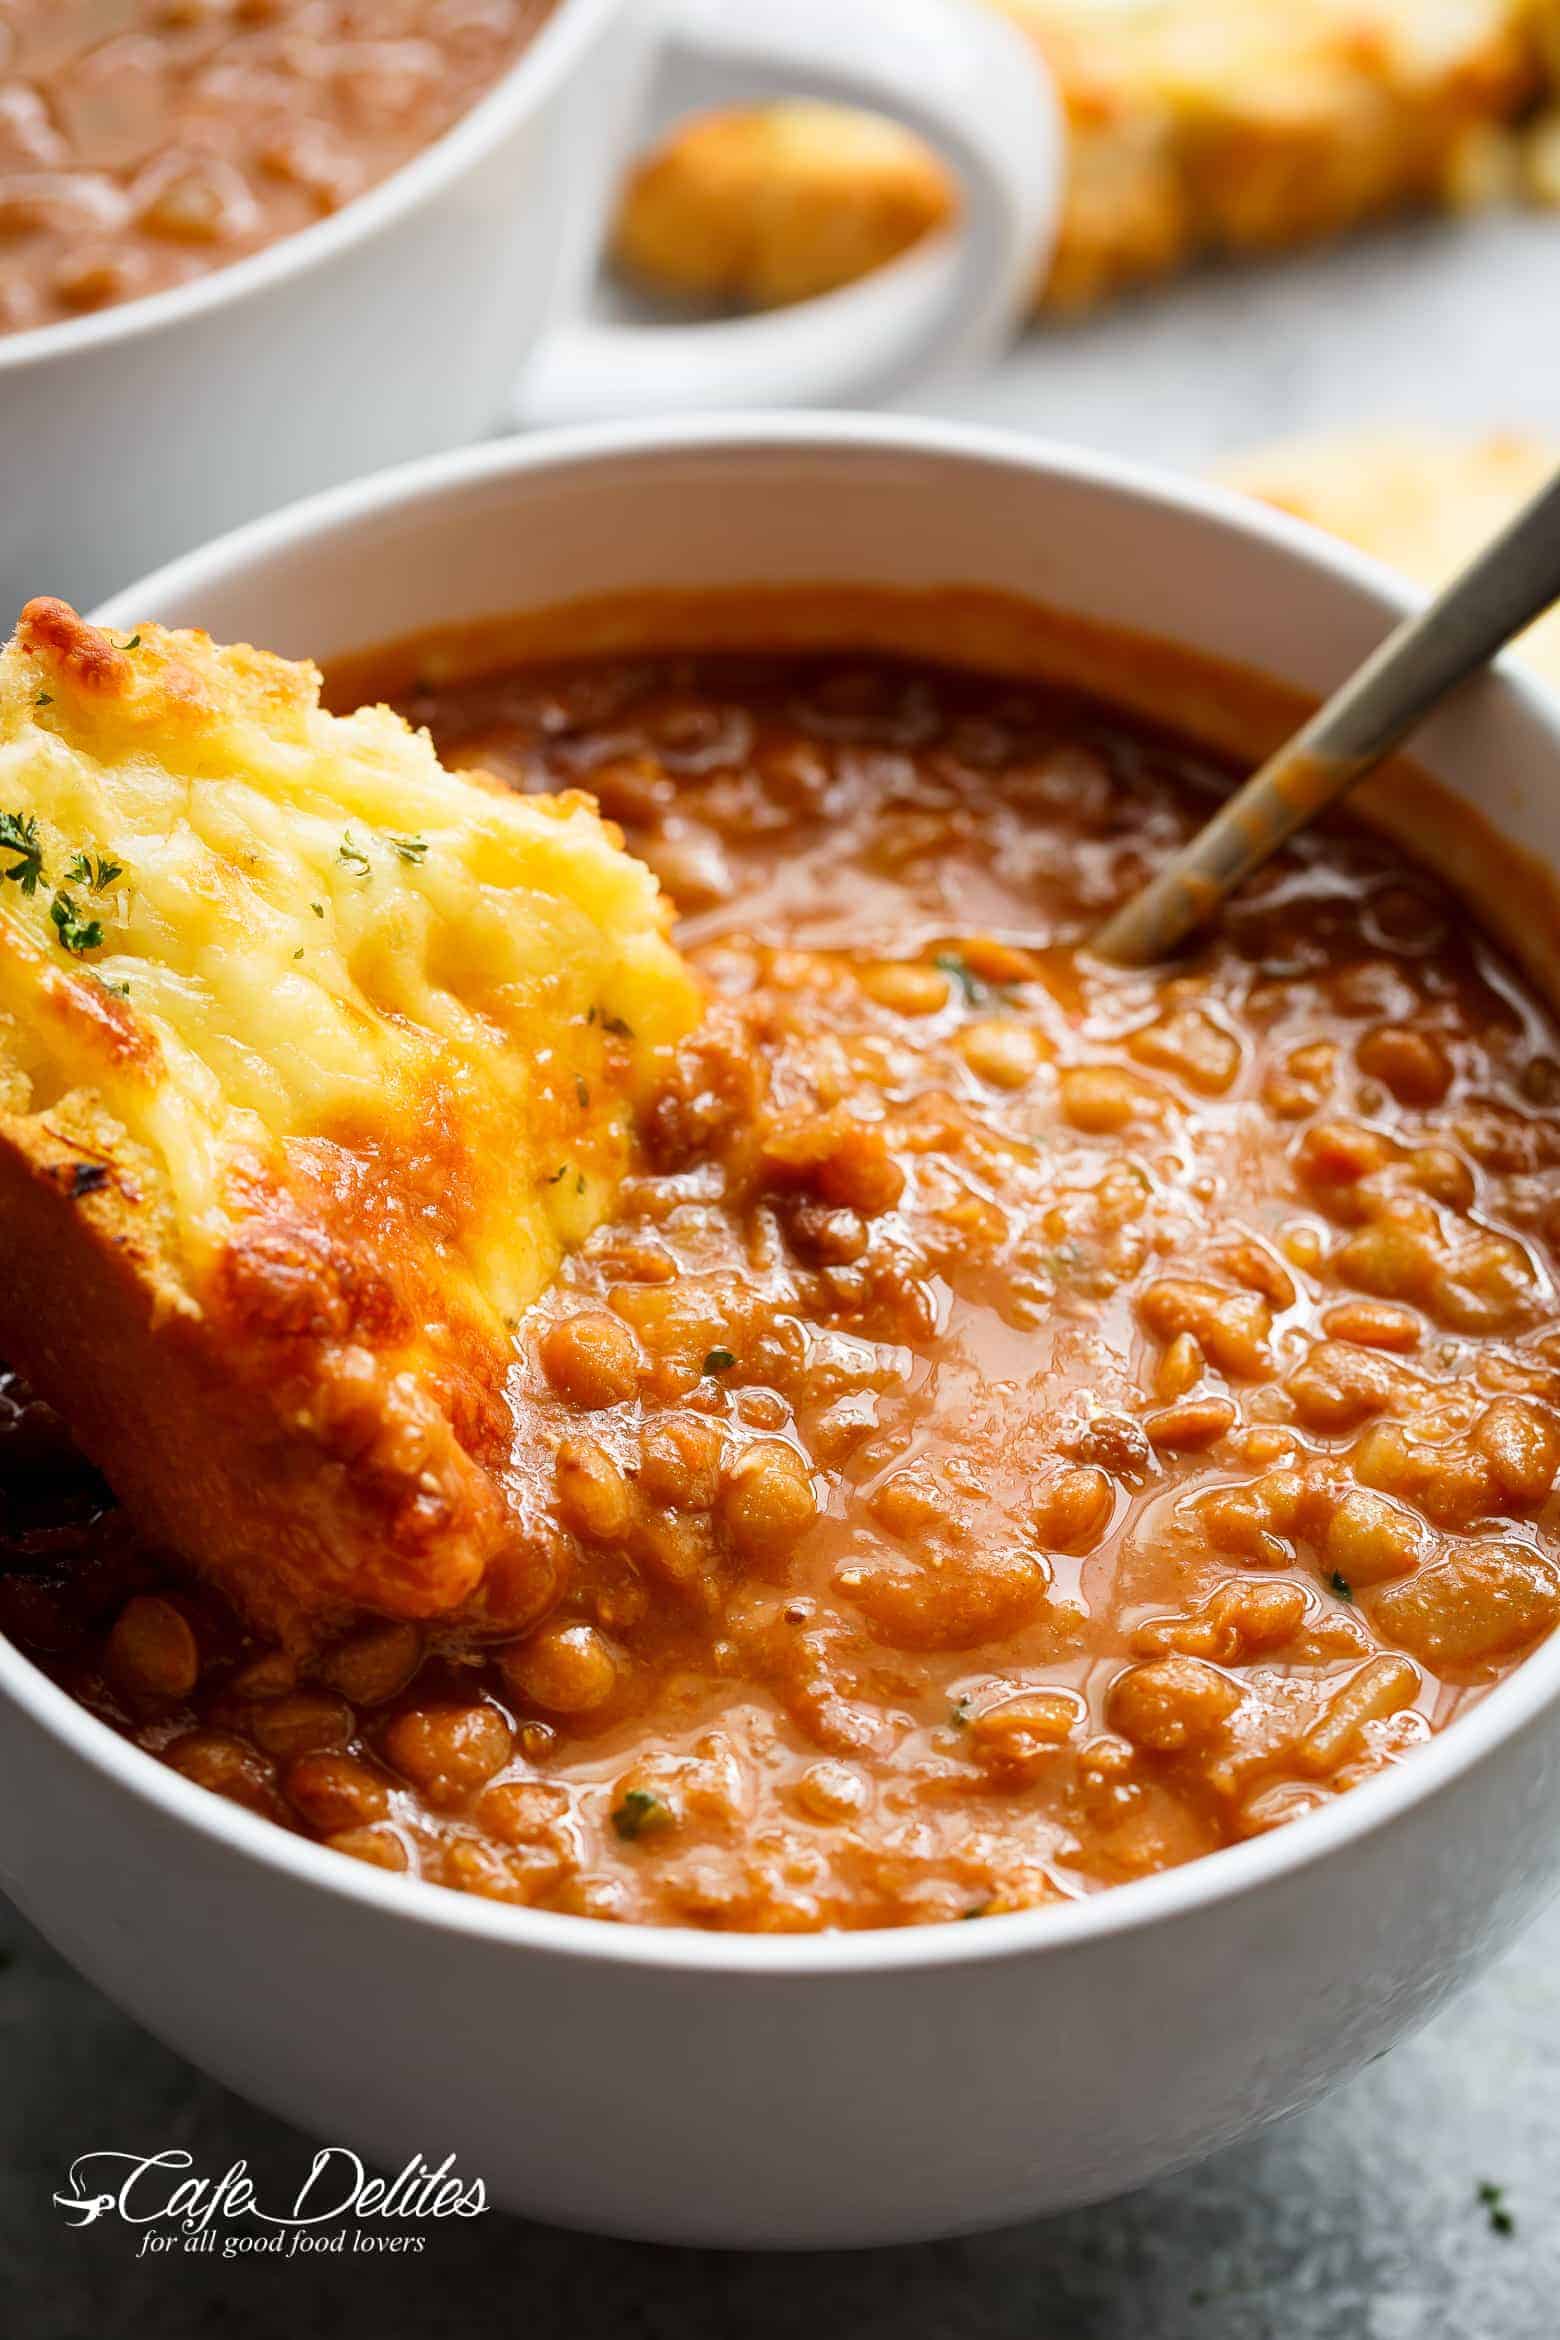 Lentil soup and garlic bread its comfort in a bowl! | cafedelites.com